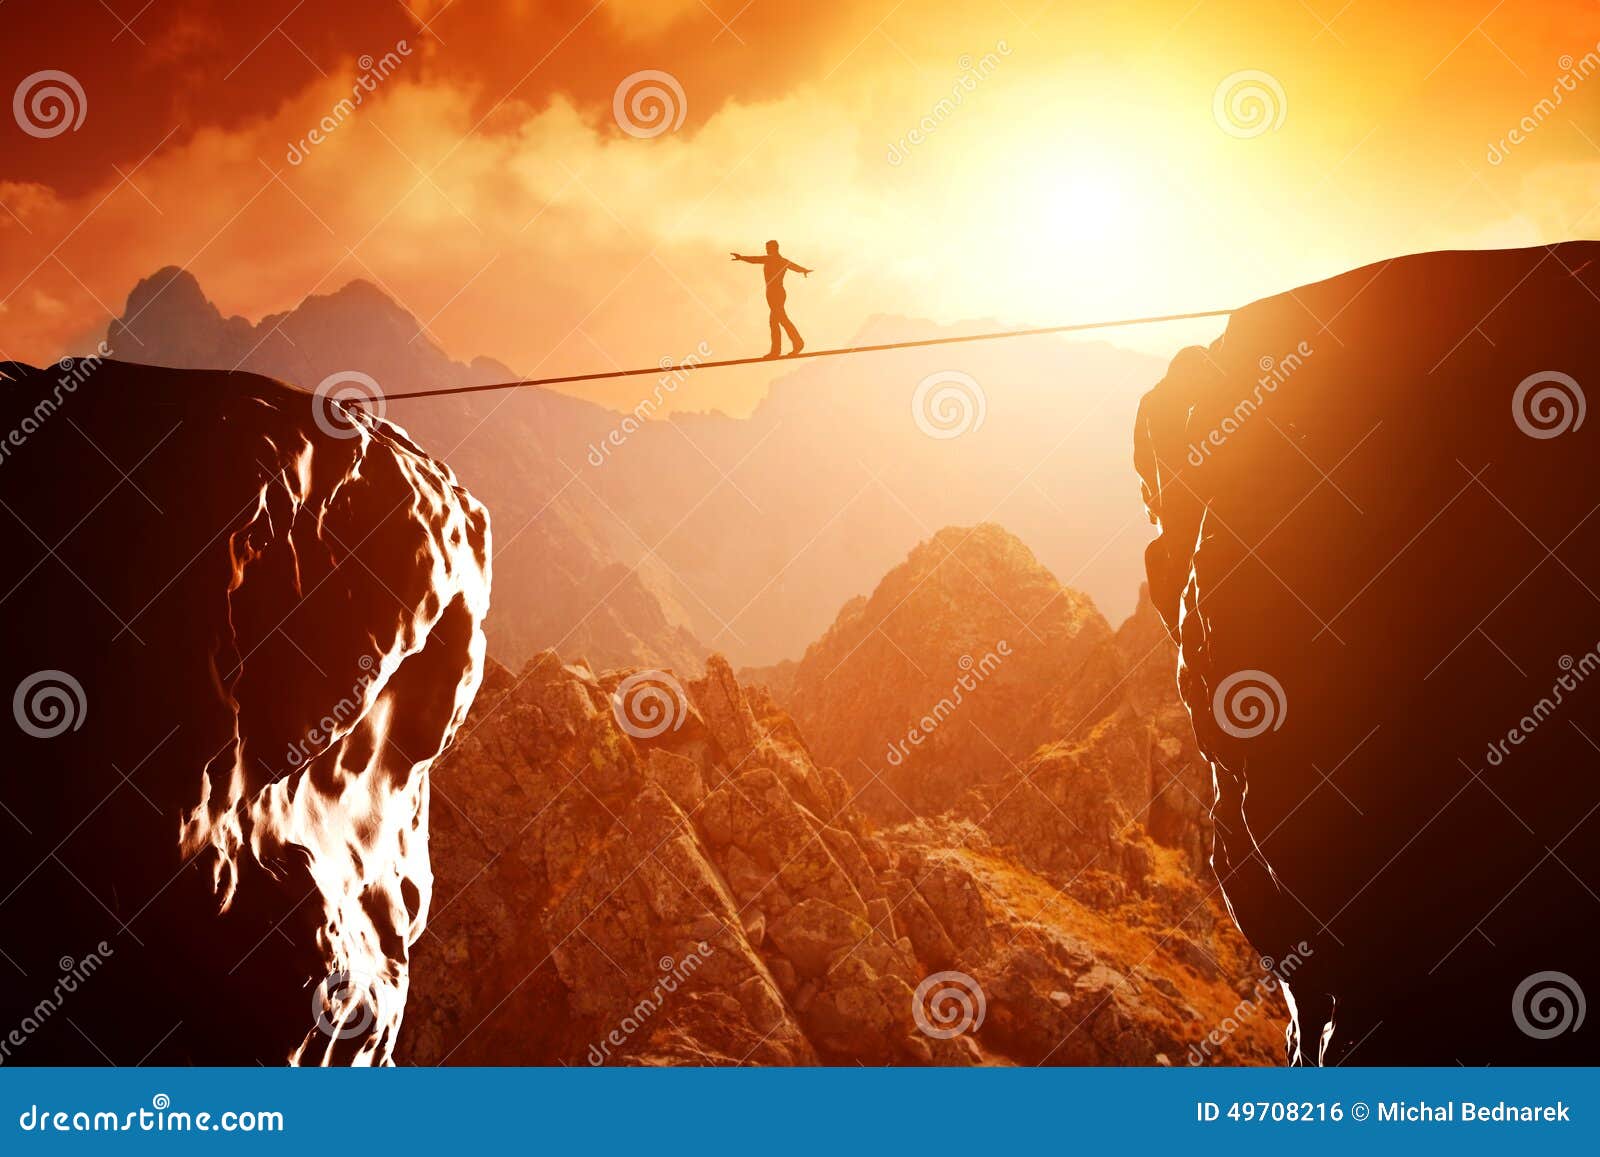 man walking and balancing on rope over precipice